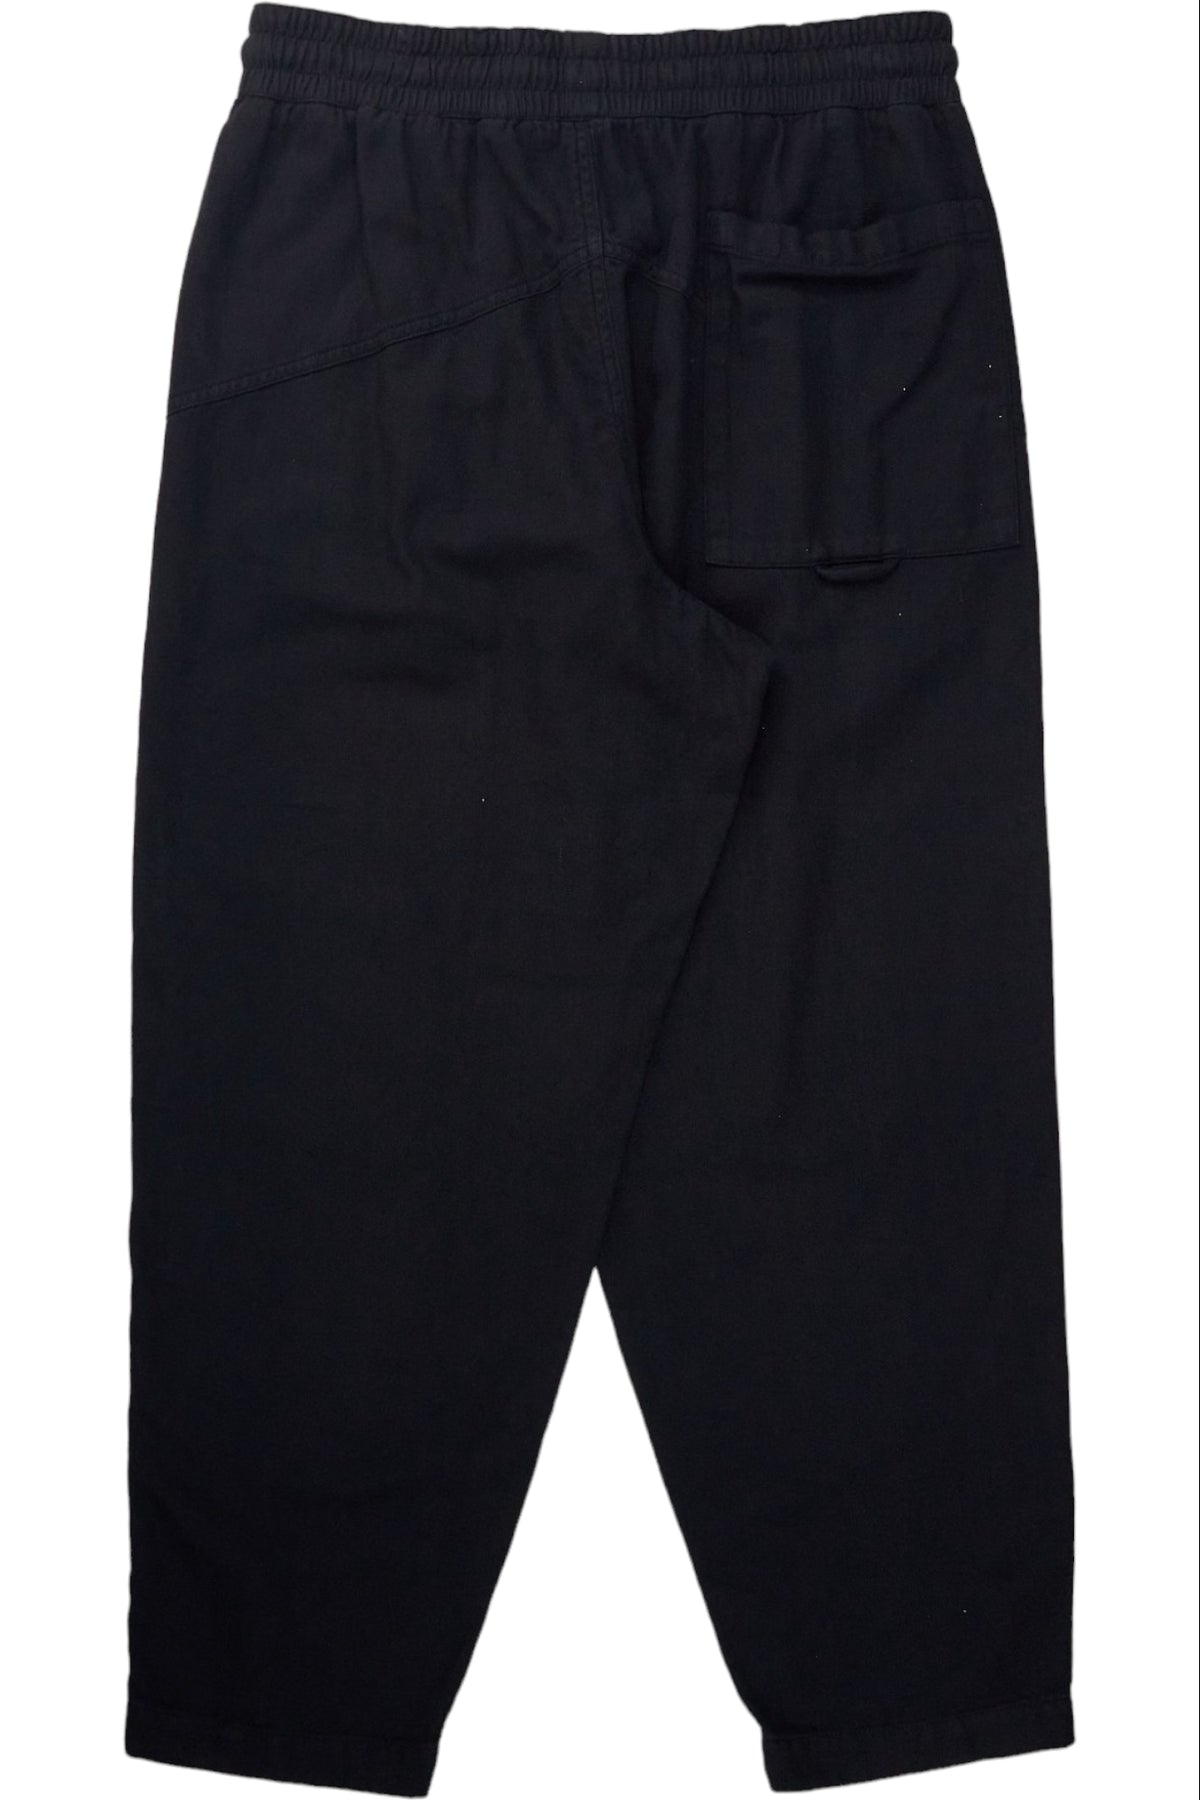 YMC Black Elasticated Trousers